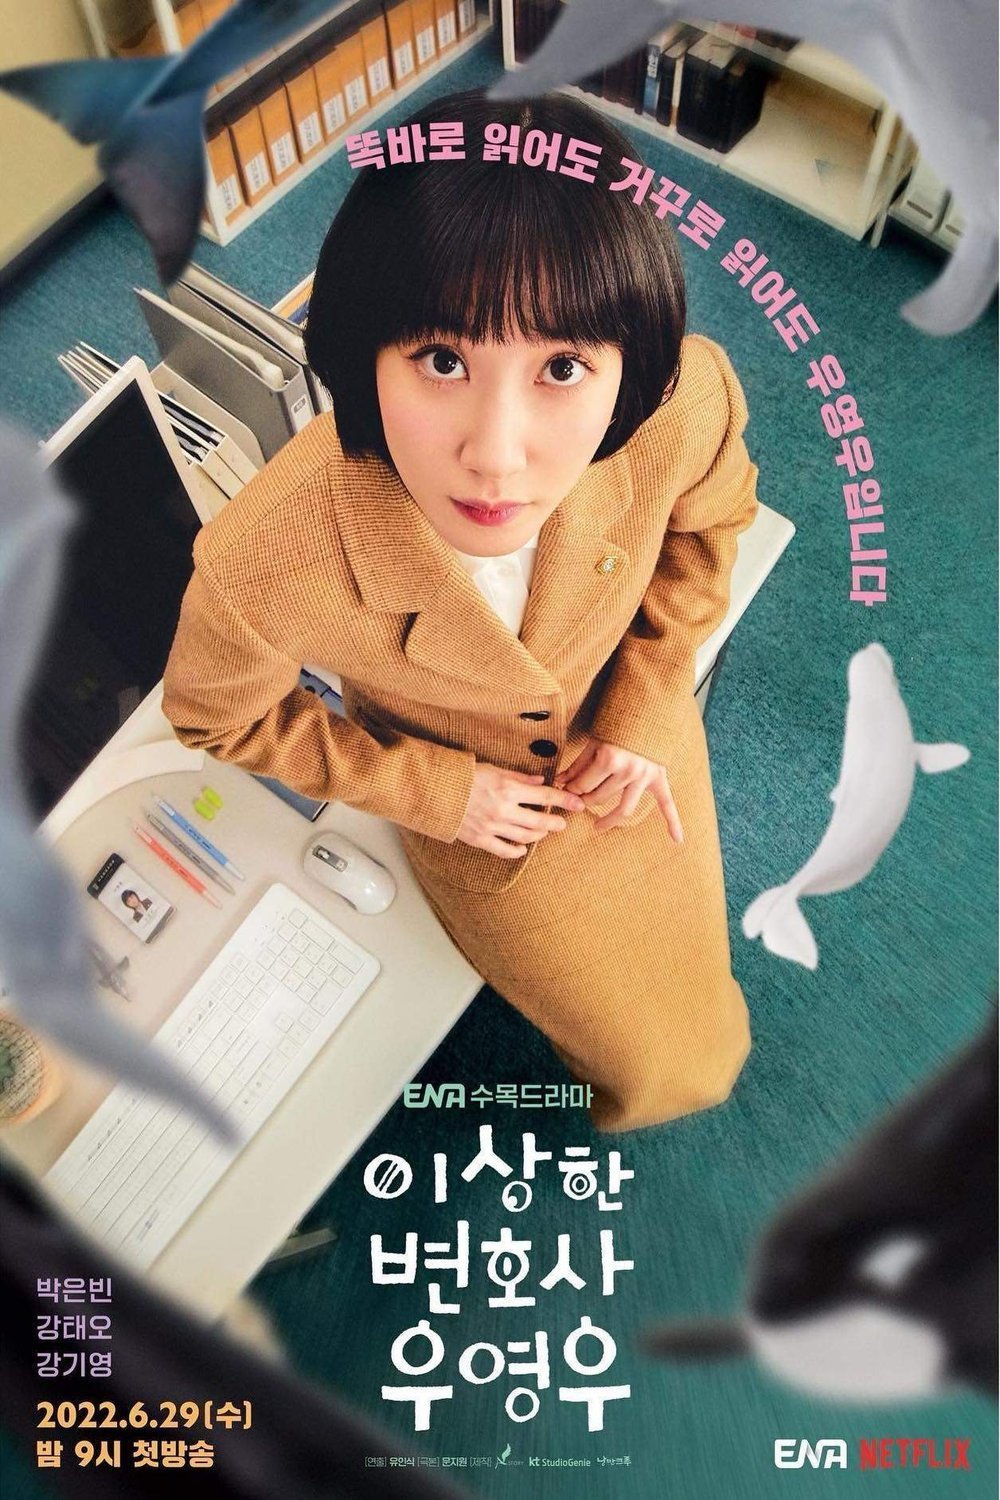 Korean poster of the movie Extraordinary Attorney Woo